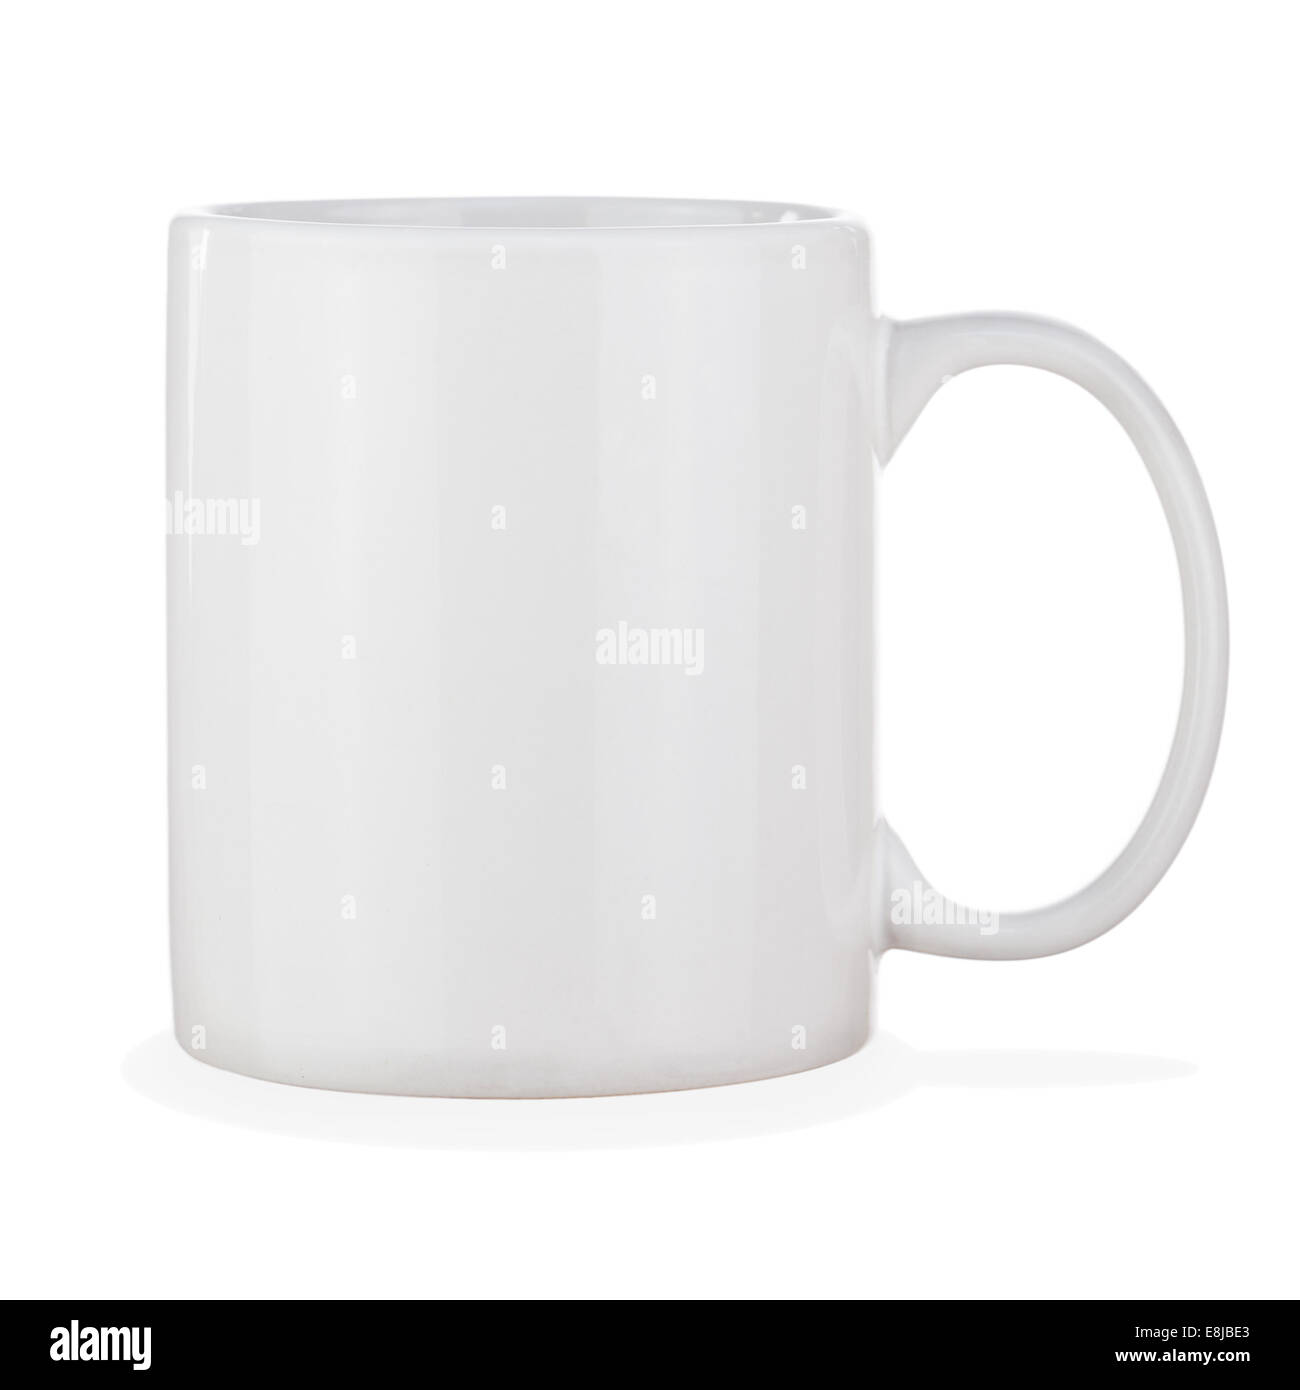 Weiße Keramik Kaffeetasse Isolated on White Background. Seitenansicht. Stockfoto